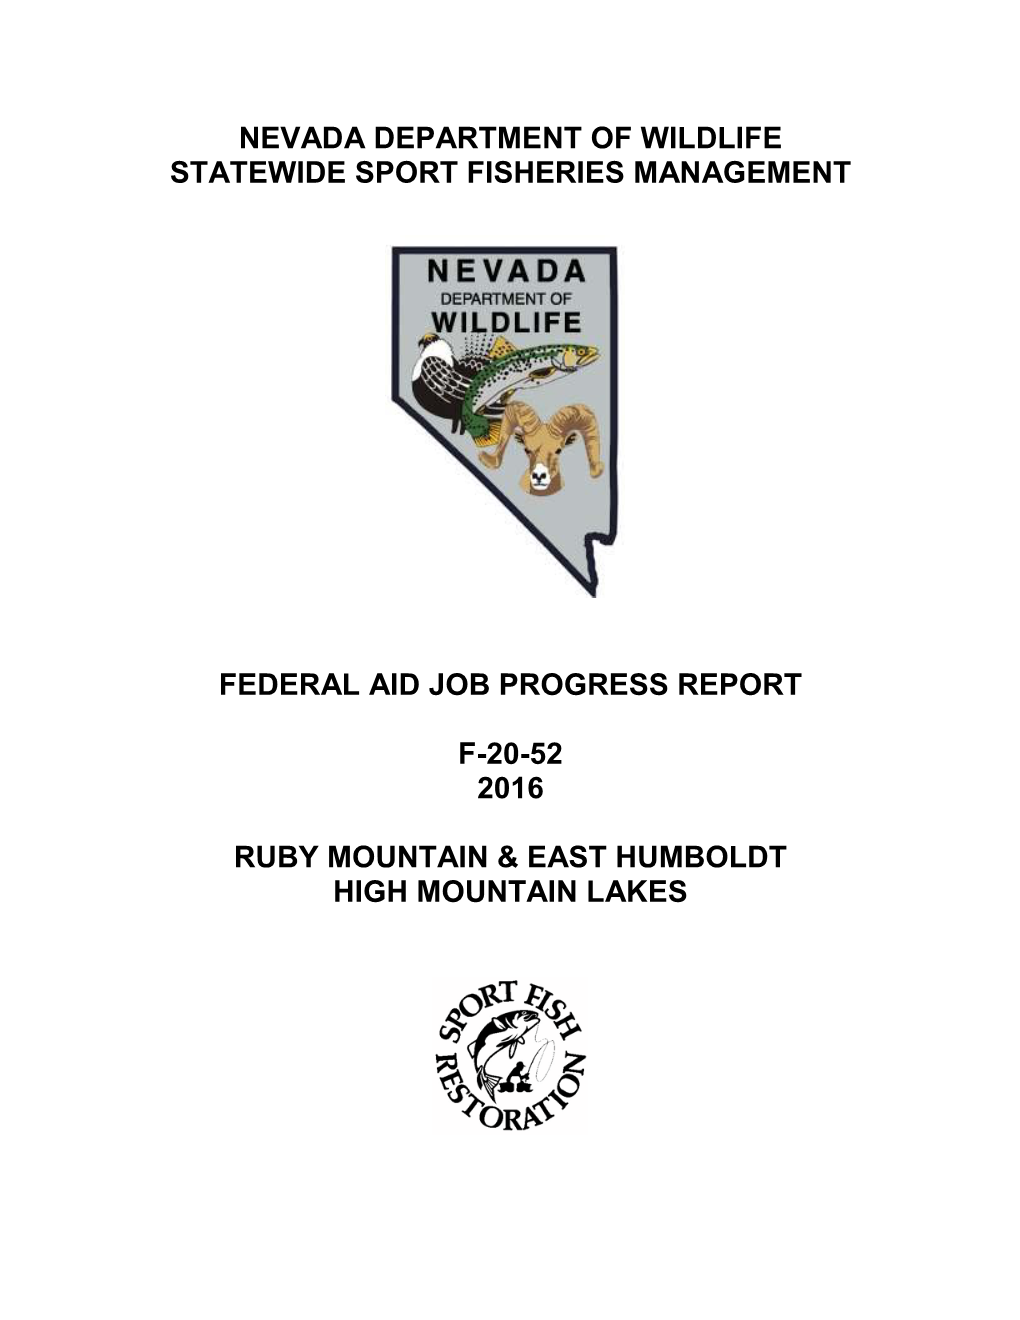 Nevada Department of Wildlife Statewide Sport Fisheries Management